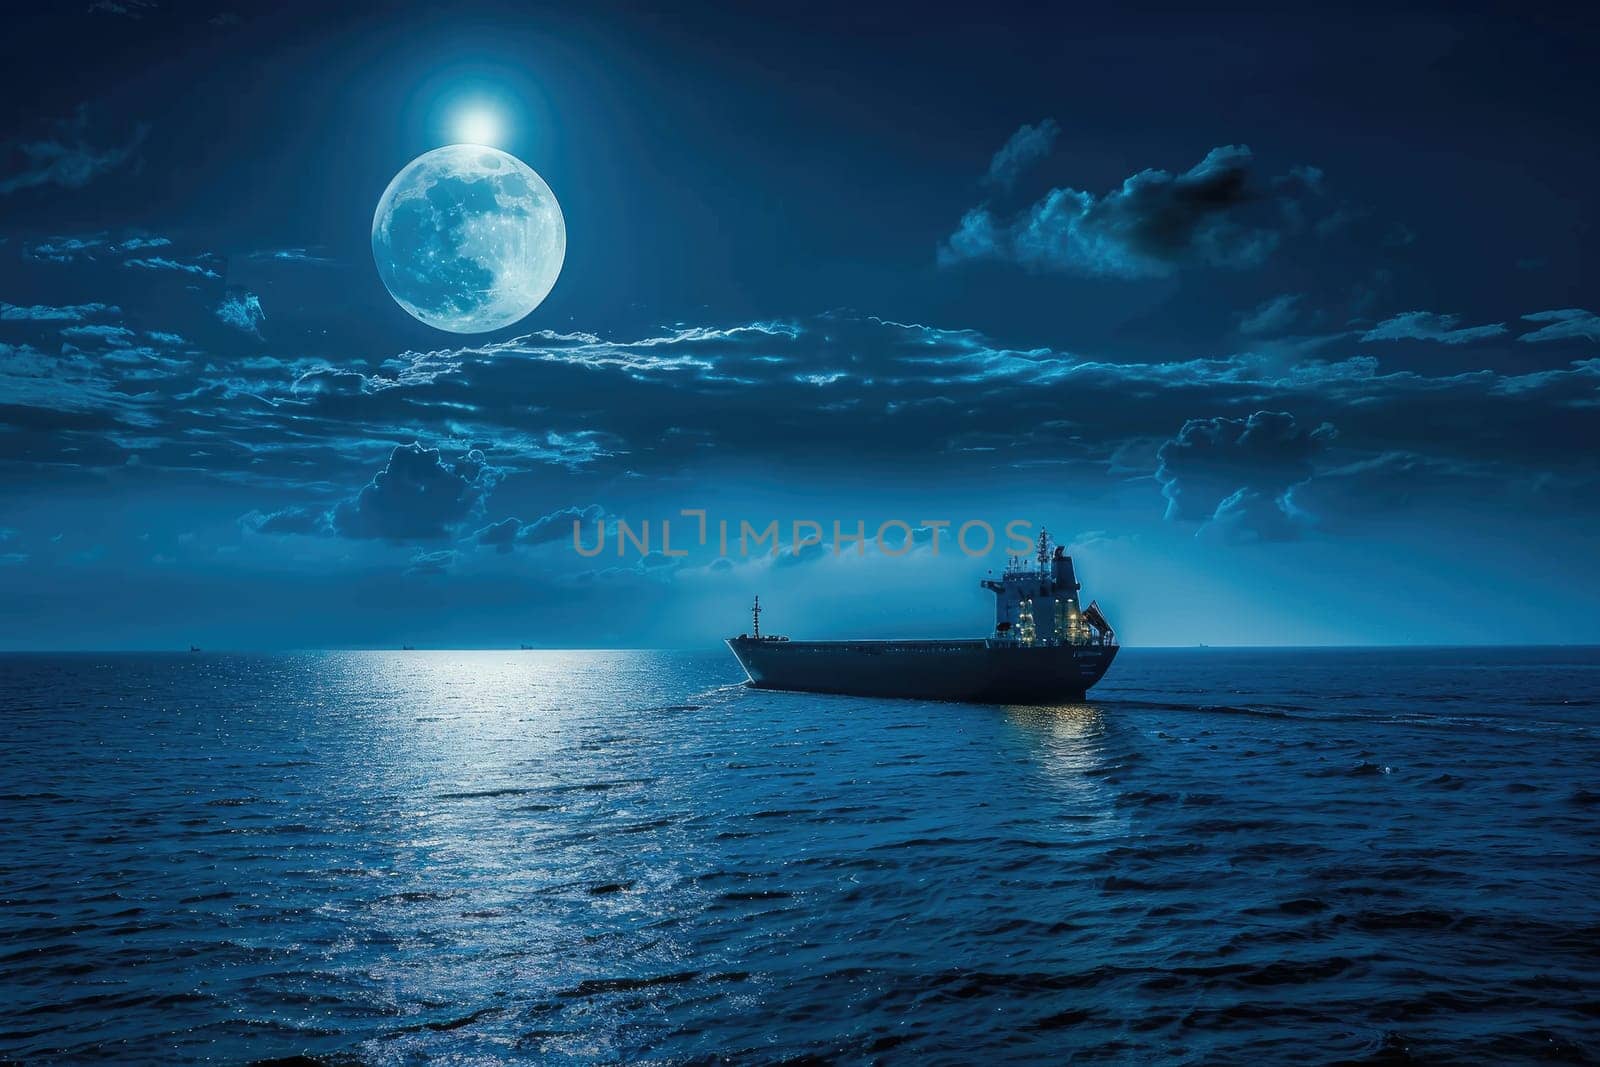 A dramatic silhouette of a cargo ship sailing across a calm ocean under a full moon